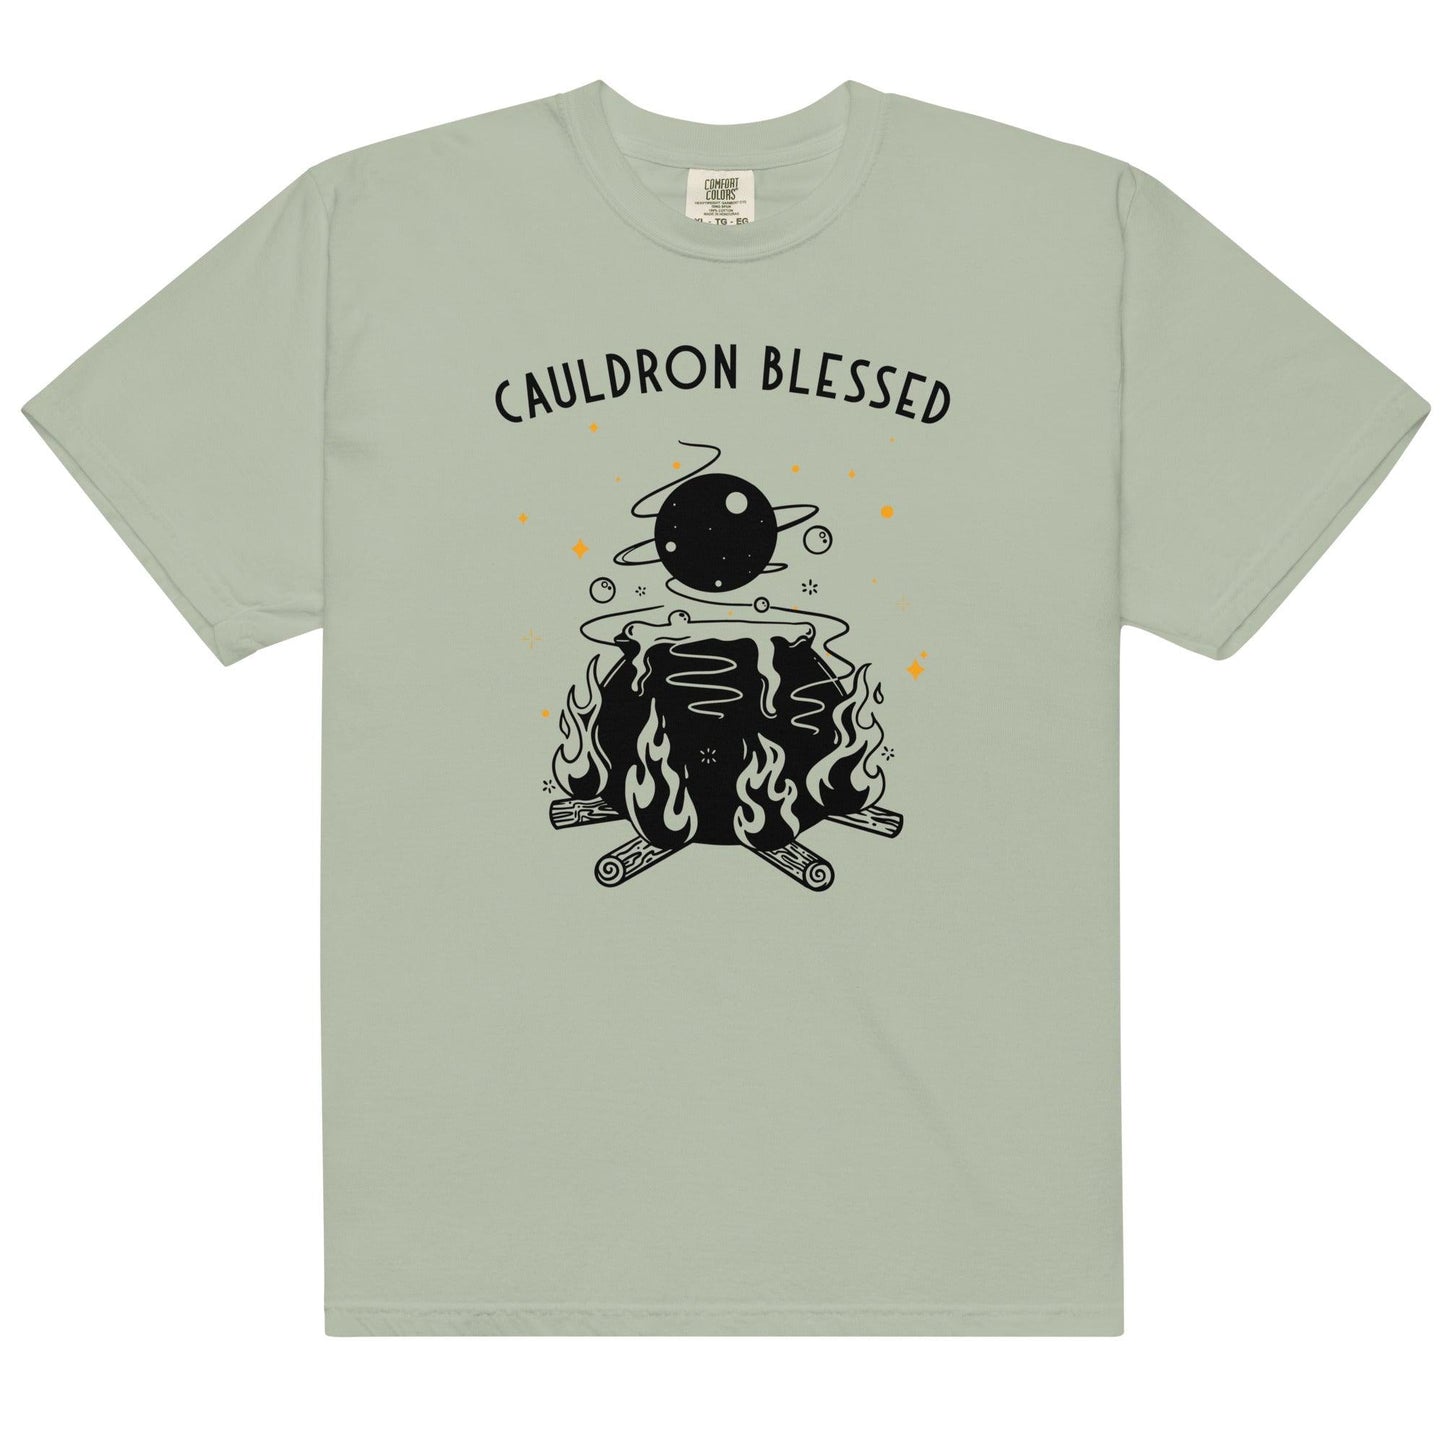 Cauldron Blessed Tee Shirt - The Bean Workshop - acotar, box tee, sarah j. maas